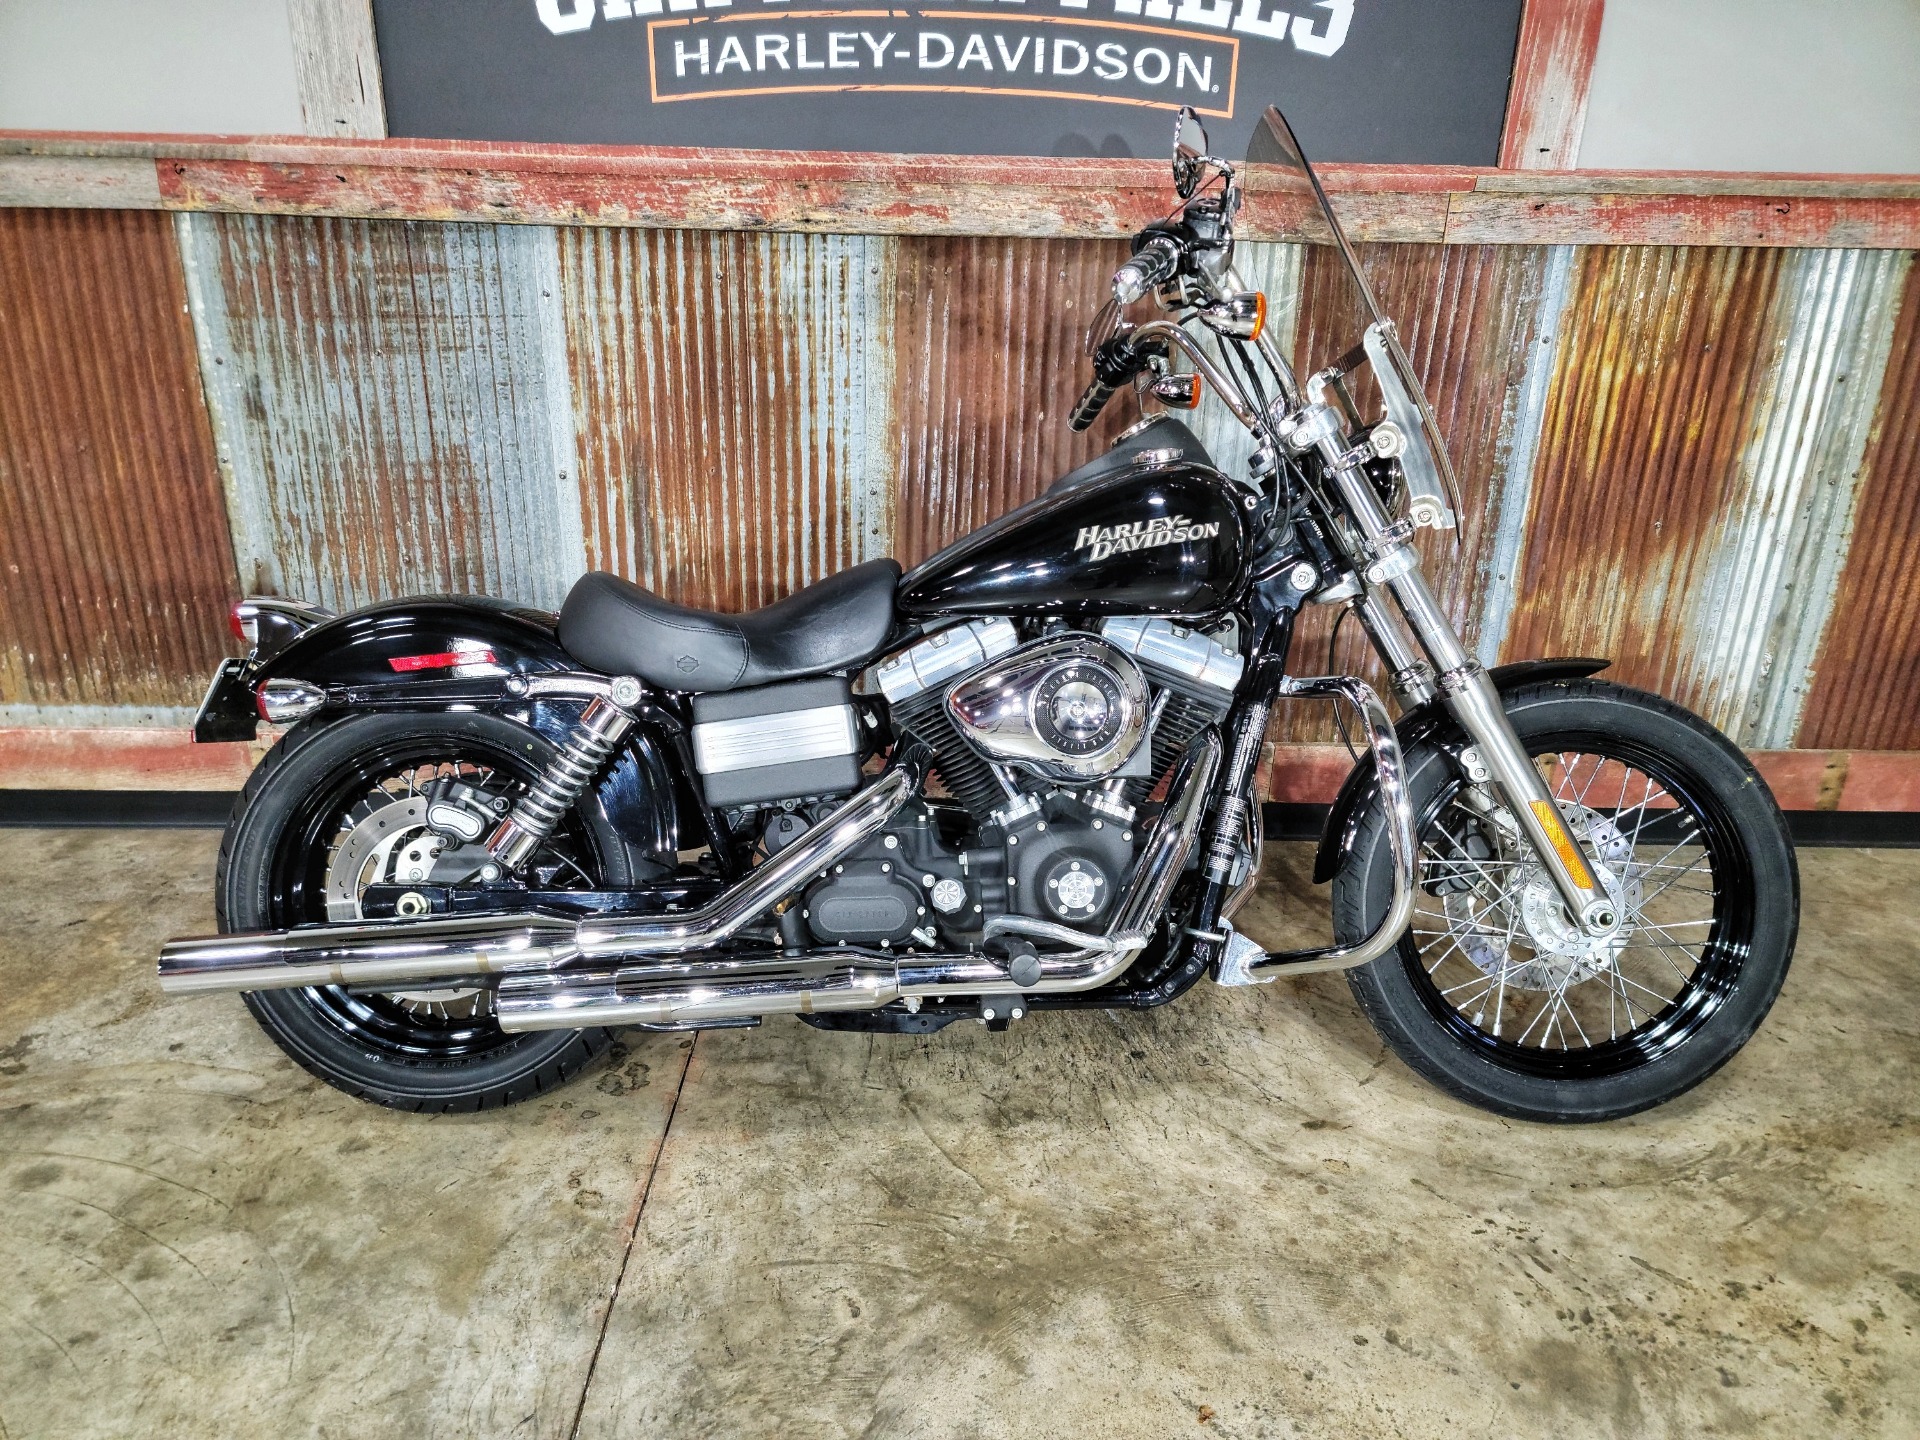 Used 2011 Harley Davidson Dyna Street Bob Vivid Black Motorcycles In Chippewa Falls Wi B0565